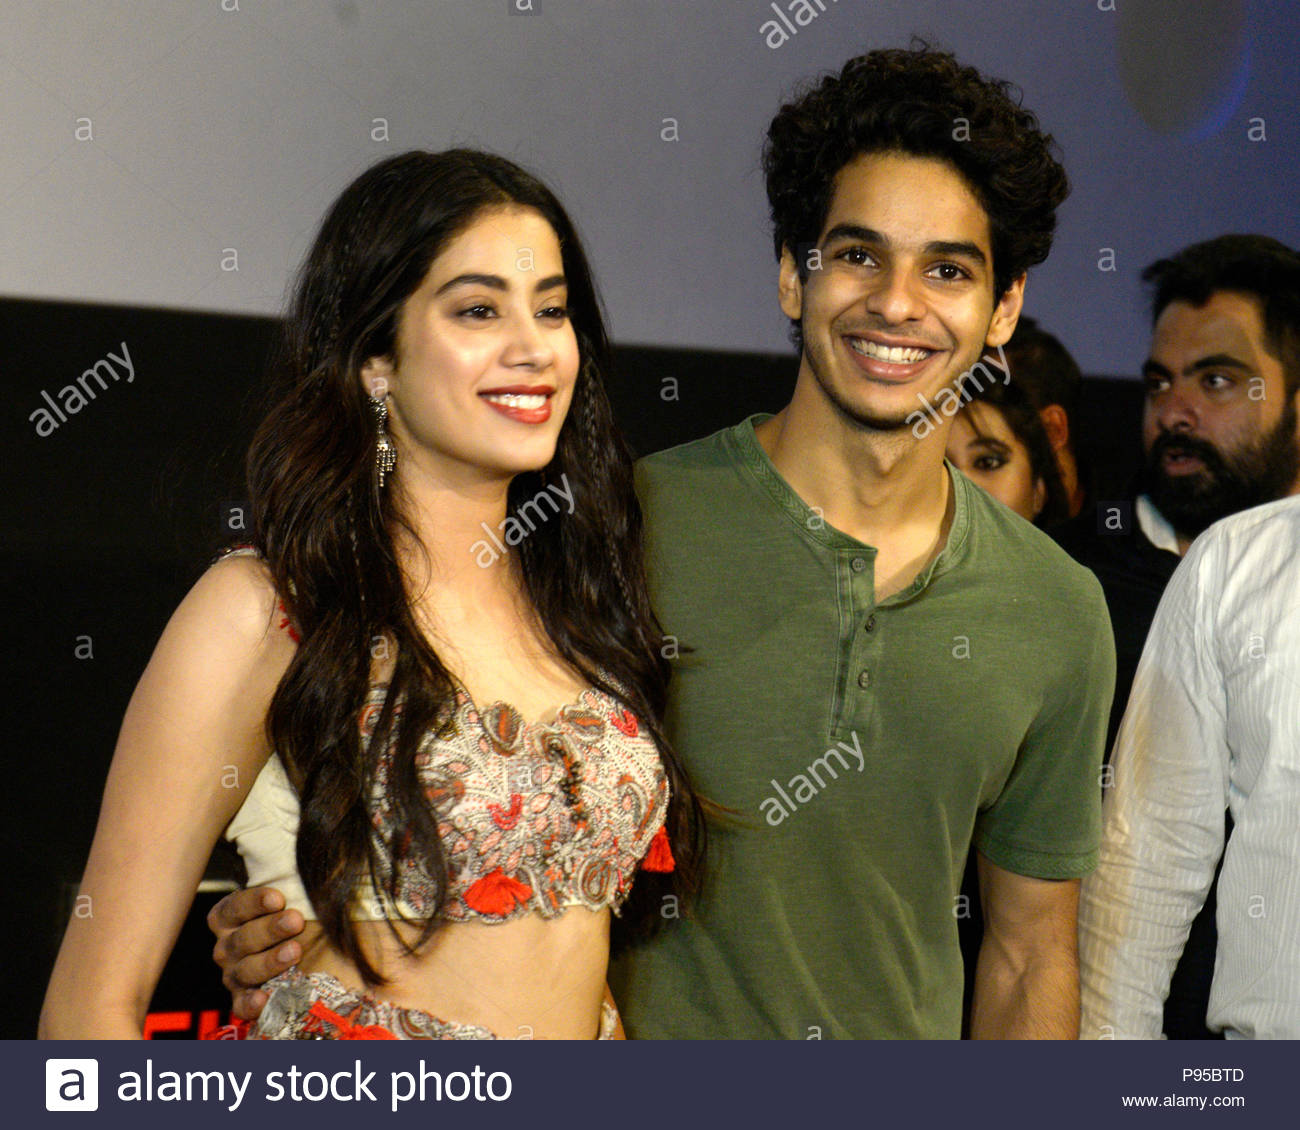 kolkata-india-13th-july-2018-actor-ishaan-khattarleft-and-actress-jhanvi-kapoor-right-take-part-in-a-promotion-event-for-their-upcoming-film-dhadak-at-inox-credit-saikat-paulpacific-pressalamy-live-news-P95BTD.jpg